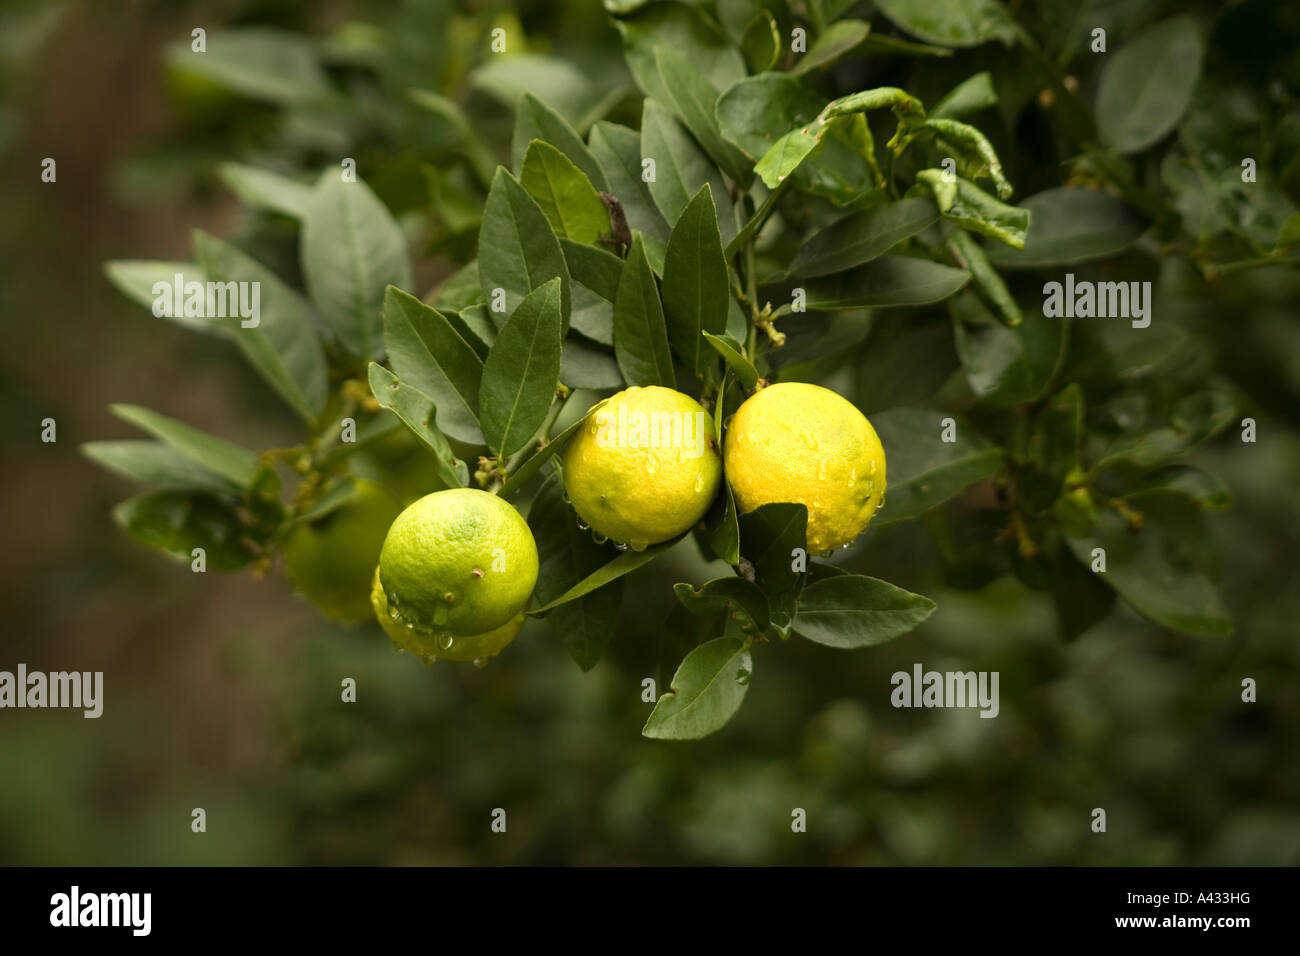 Ripe yellow  keylimes Citrus aurantifolia Swingle or Limonia aurantifolia Stock Photo